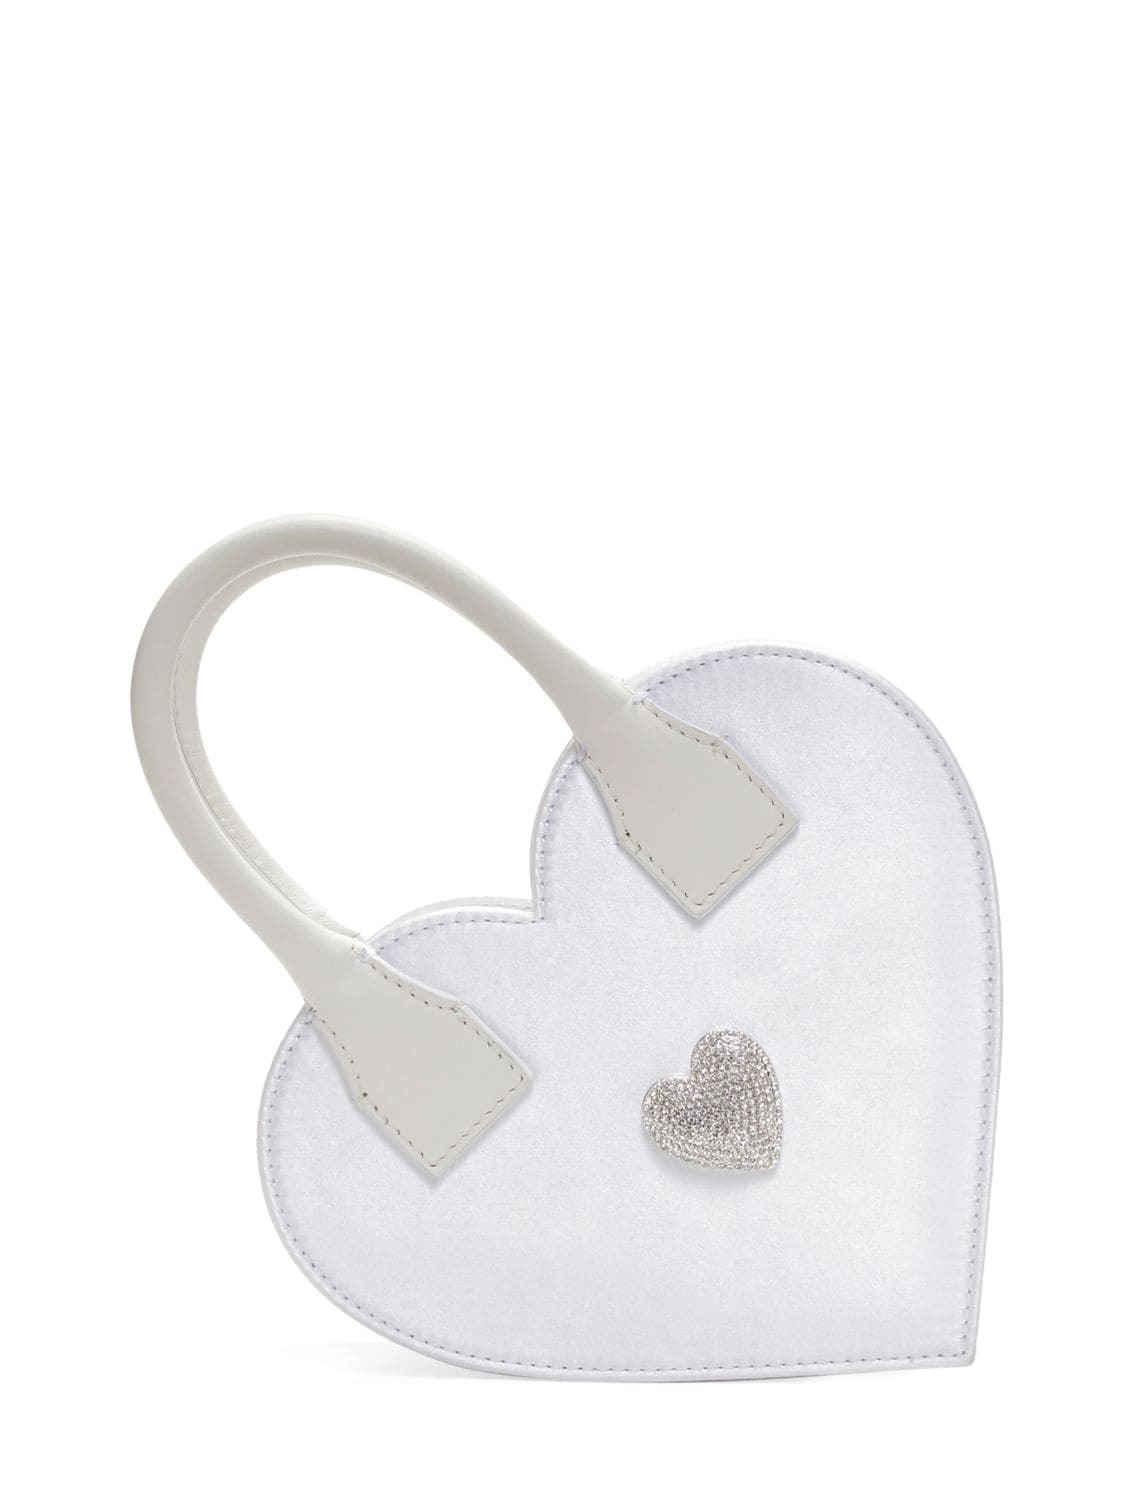 MACH & MACH Heart Satin Top Handle Bag in white